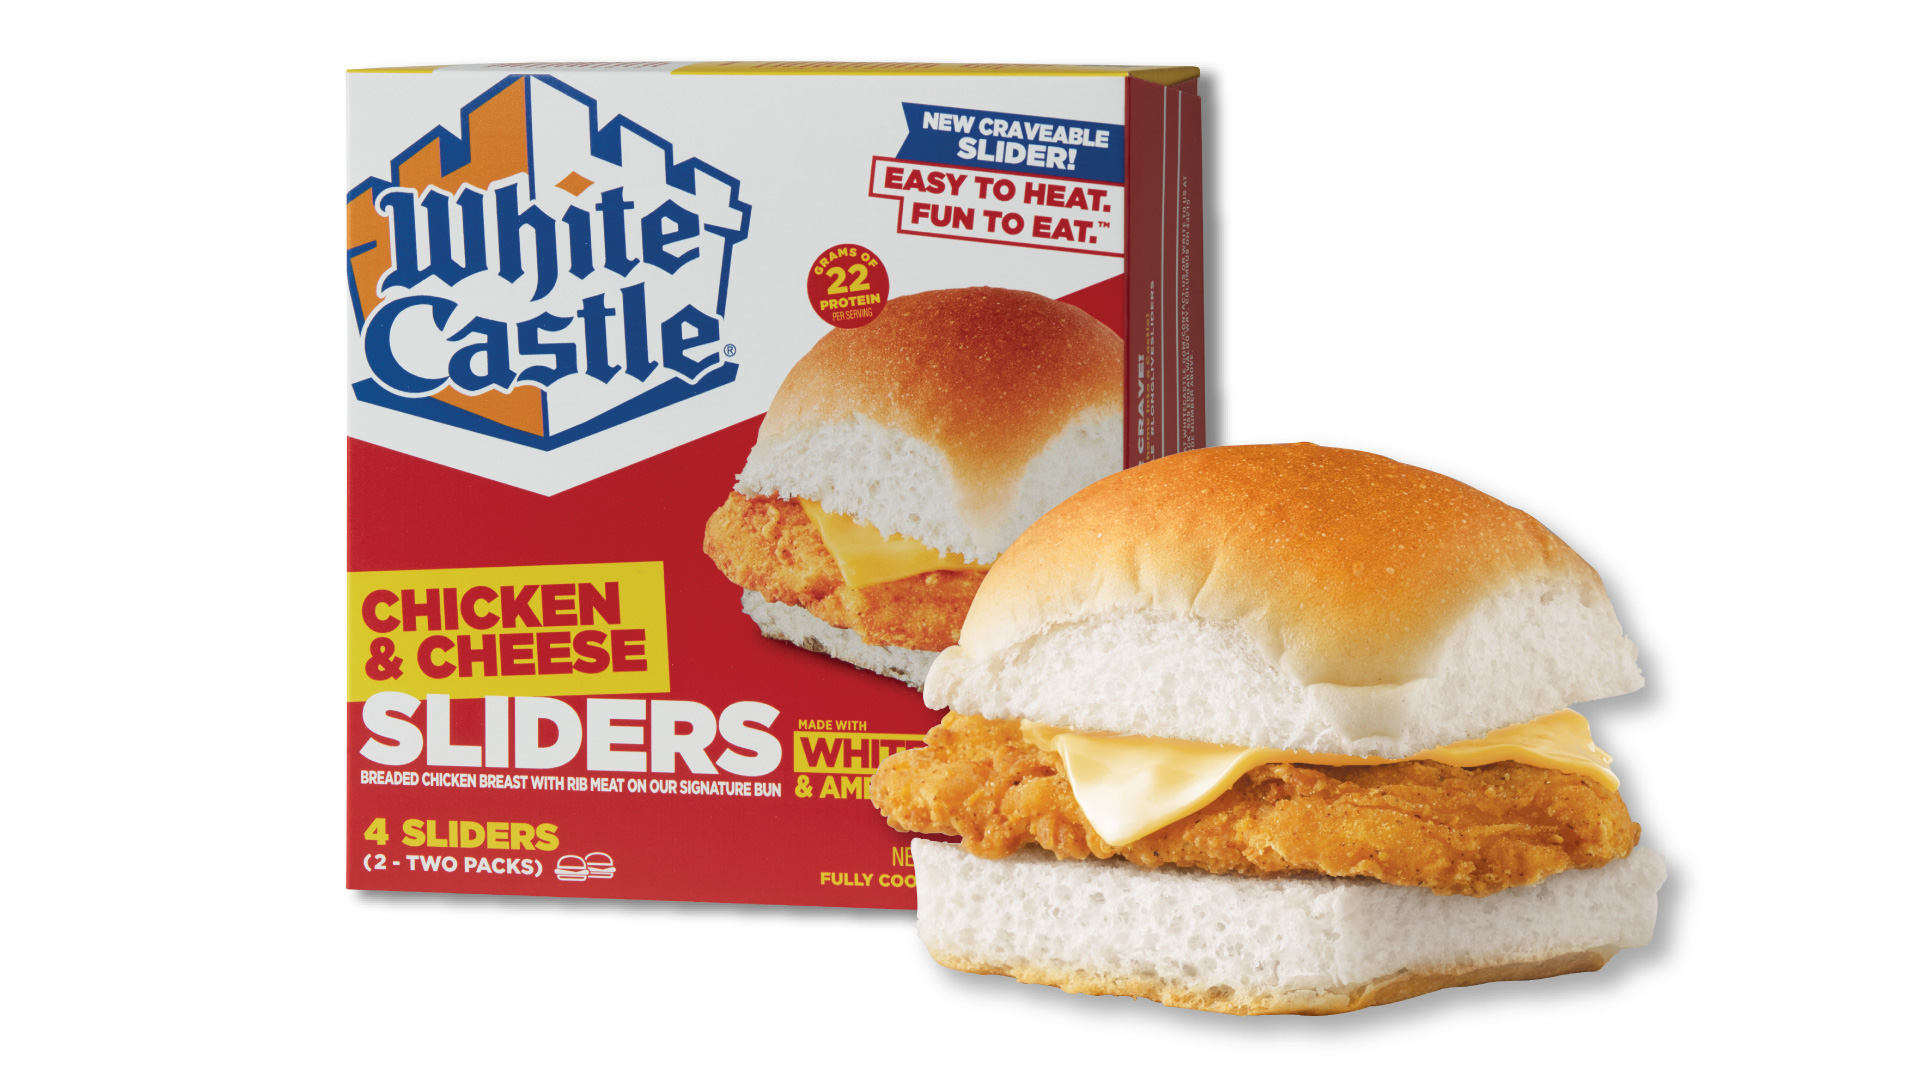 White Castle Chicken Cheese Sliders